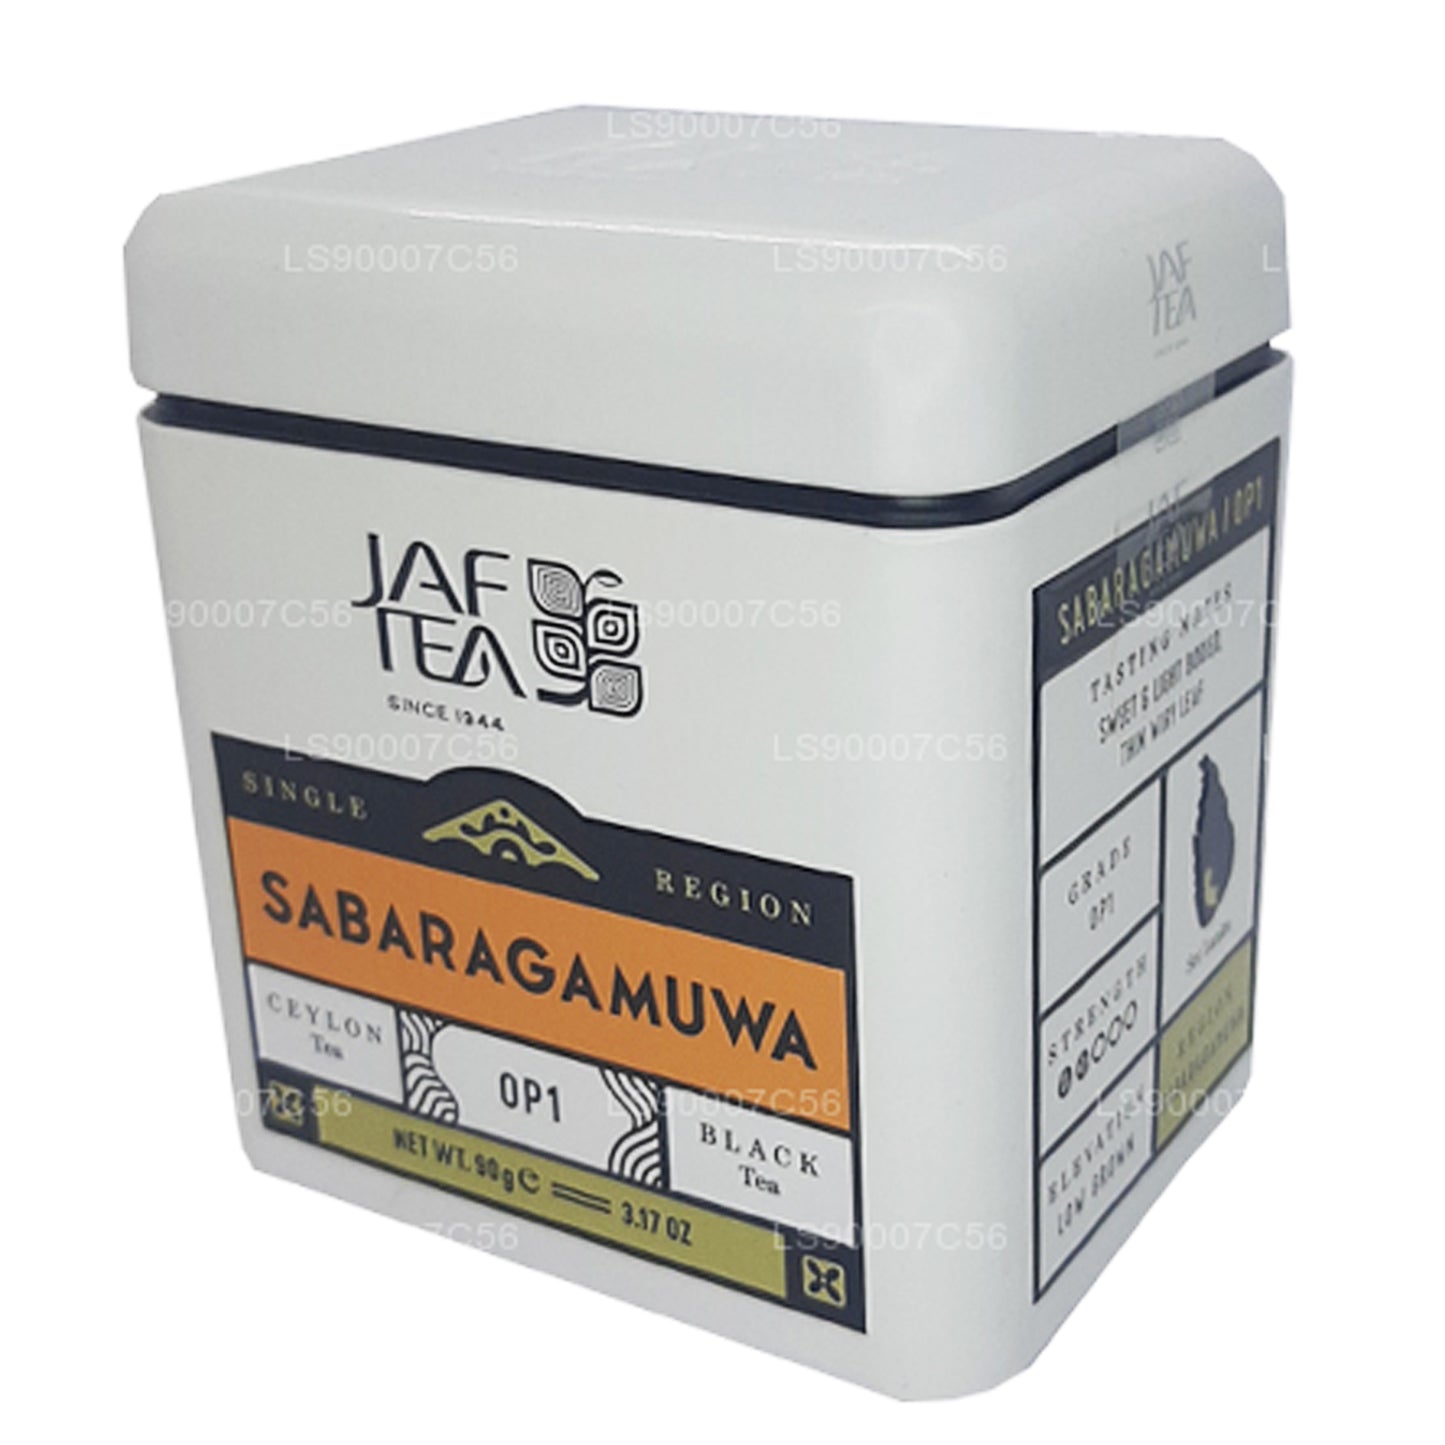 Jaf Tea Single Region Collection Sabaragamuwa OP1 Caddy (90g)